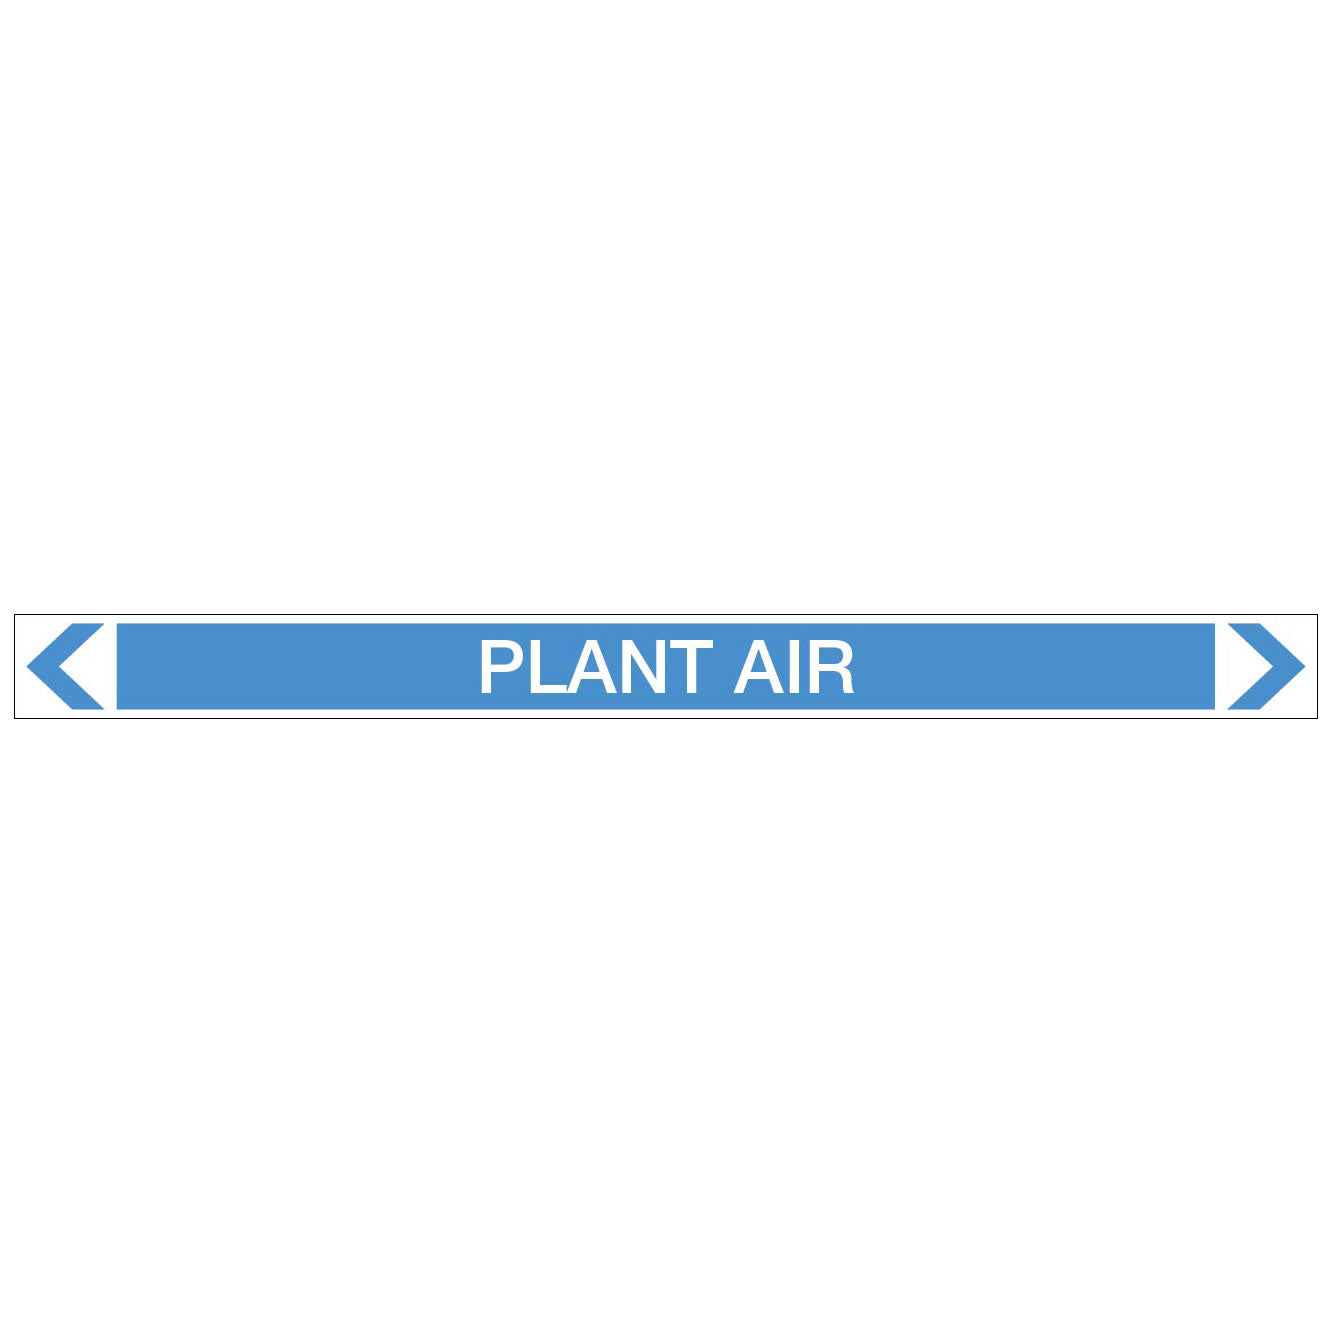 Air - Plant Air - Pipe Marker Sticker